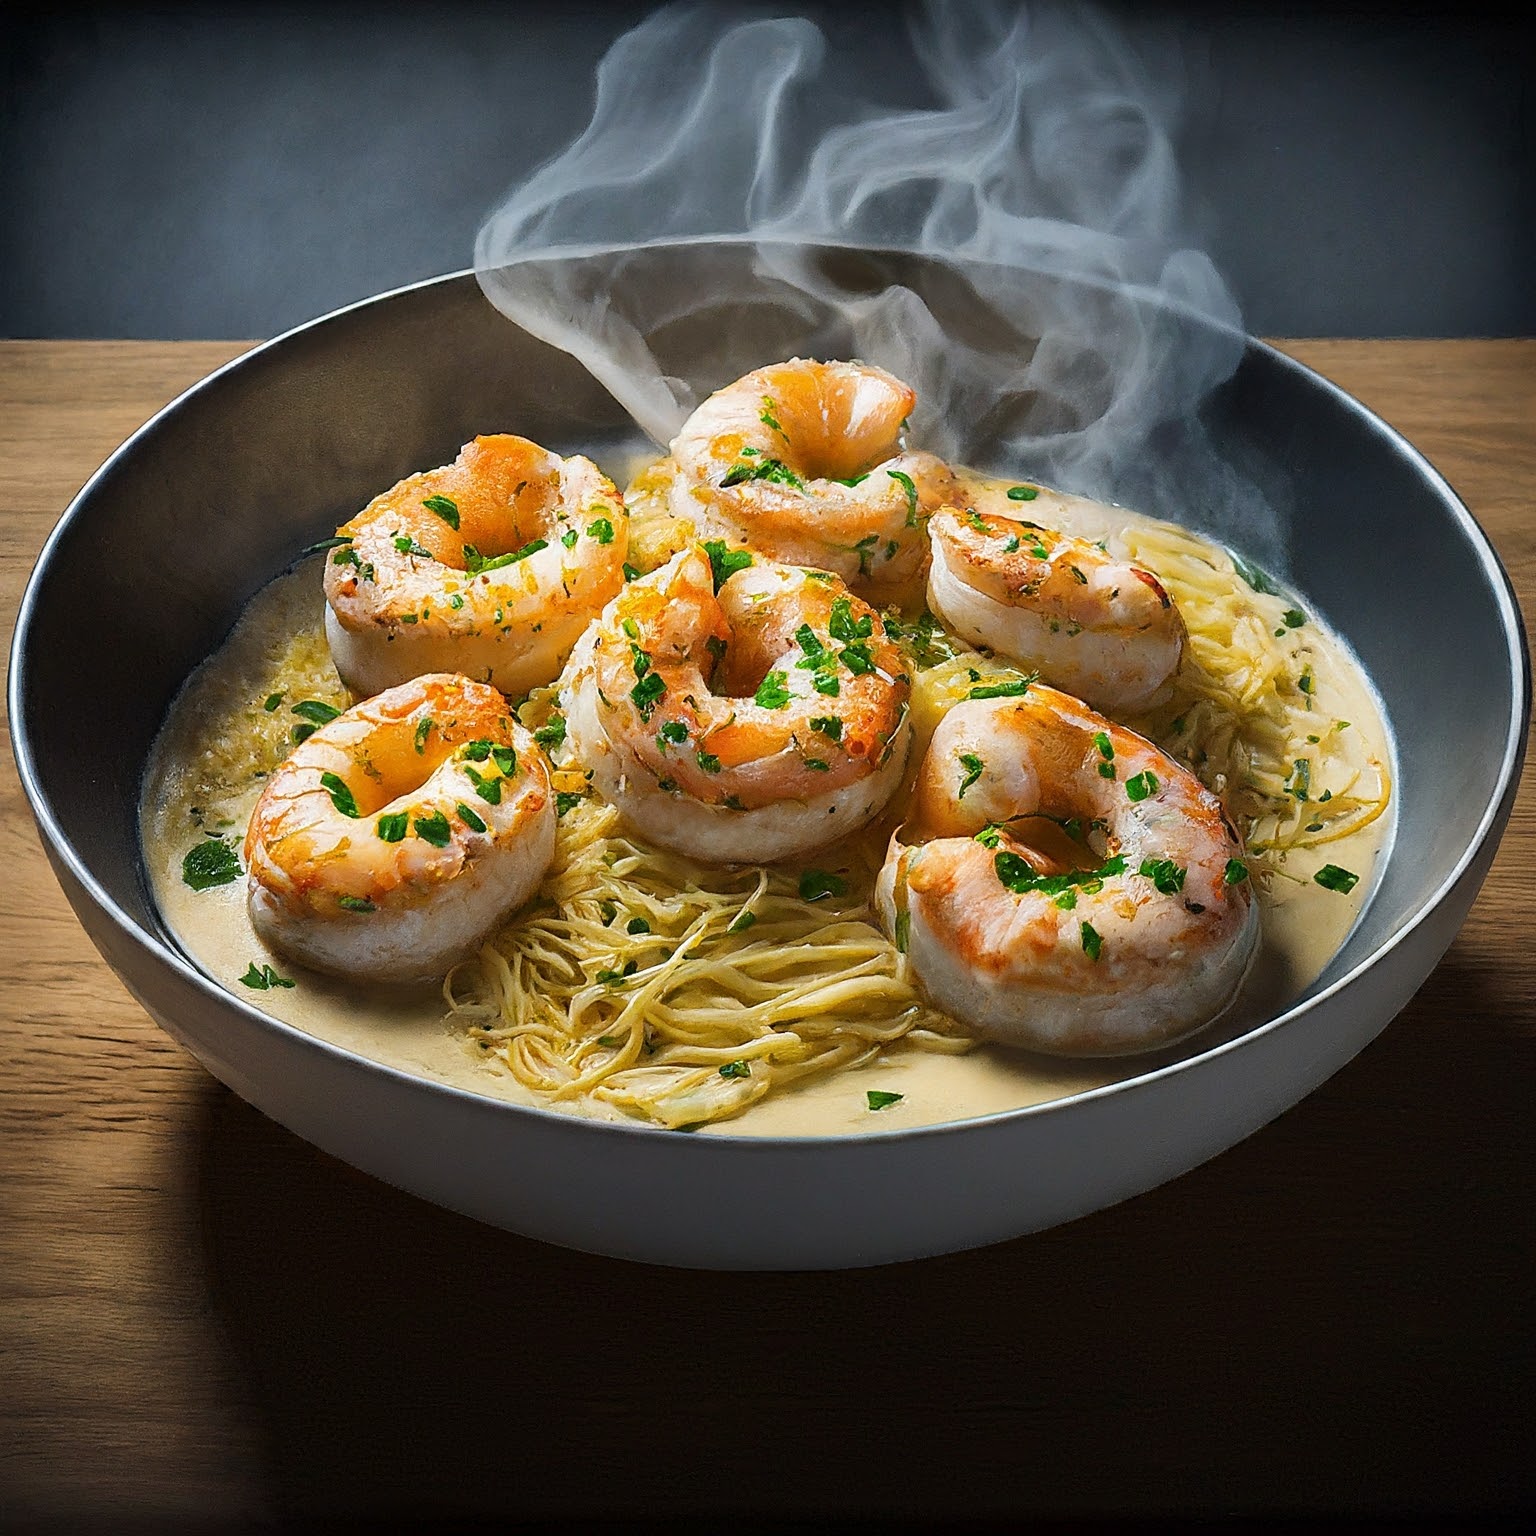 shrimp scampi recipe: Sizzle and Savory!